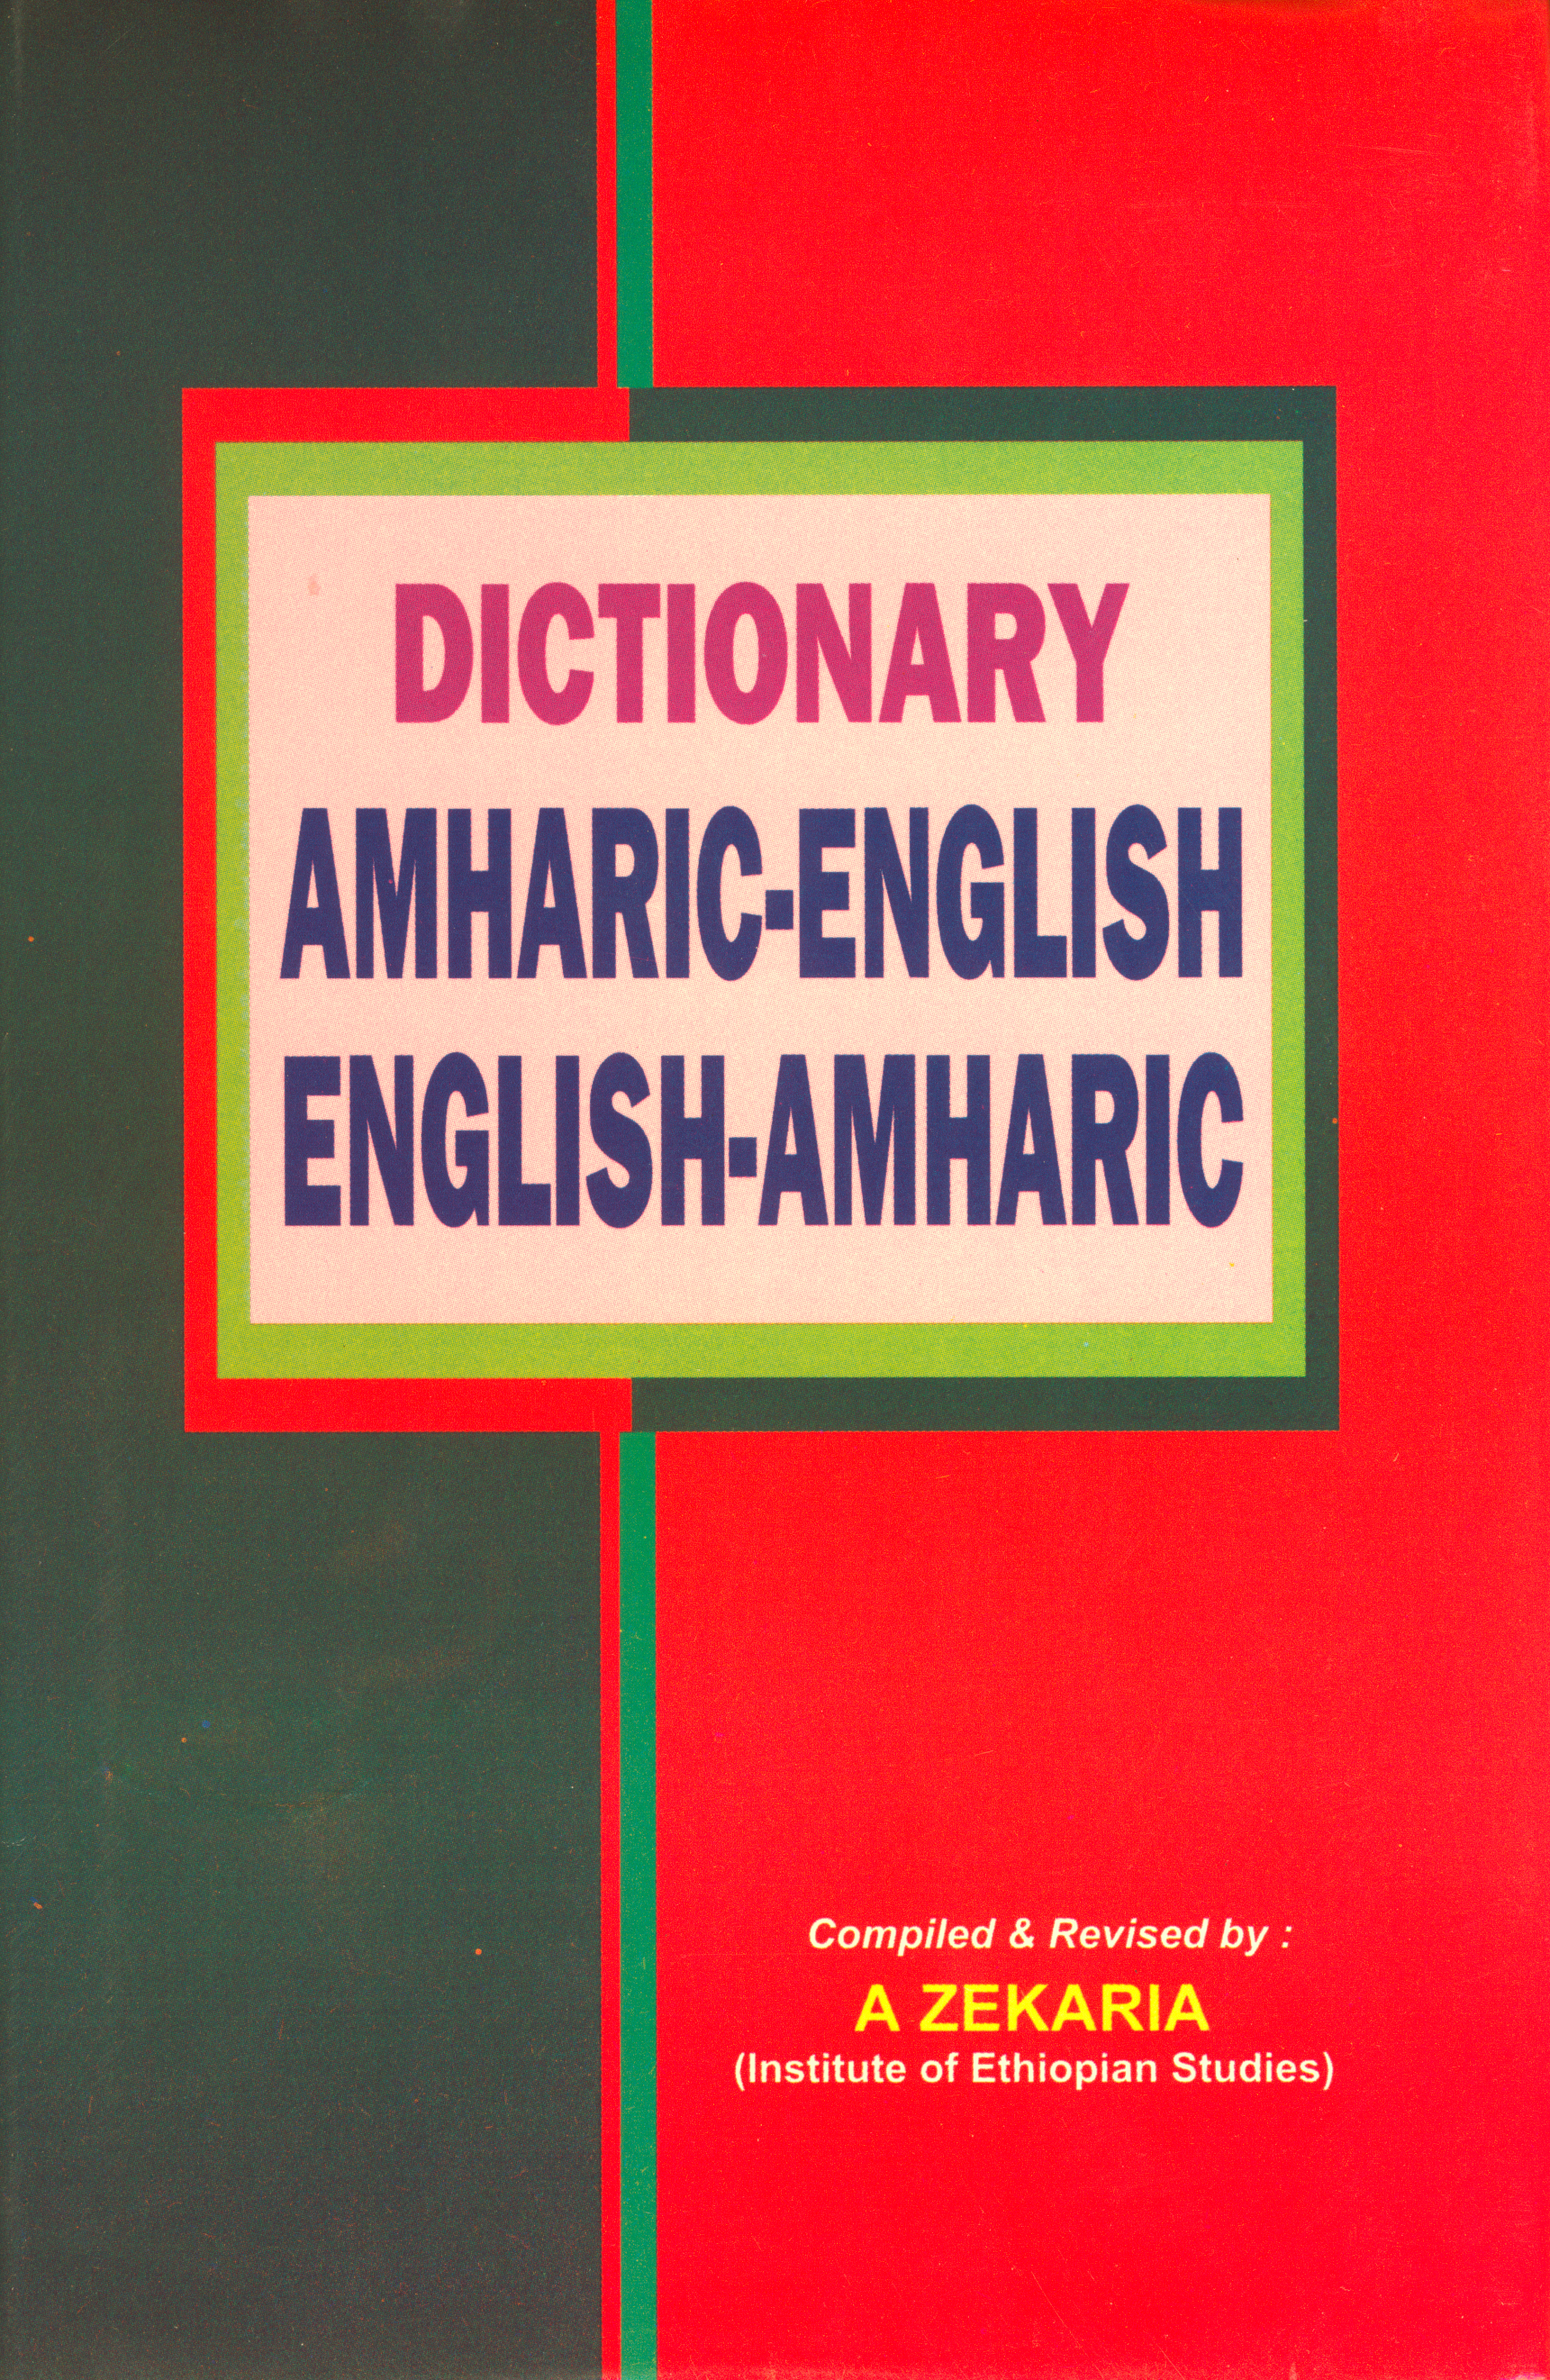 Amharic-English and English-Amharic Dictionary